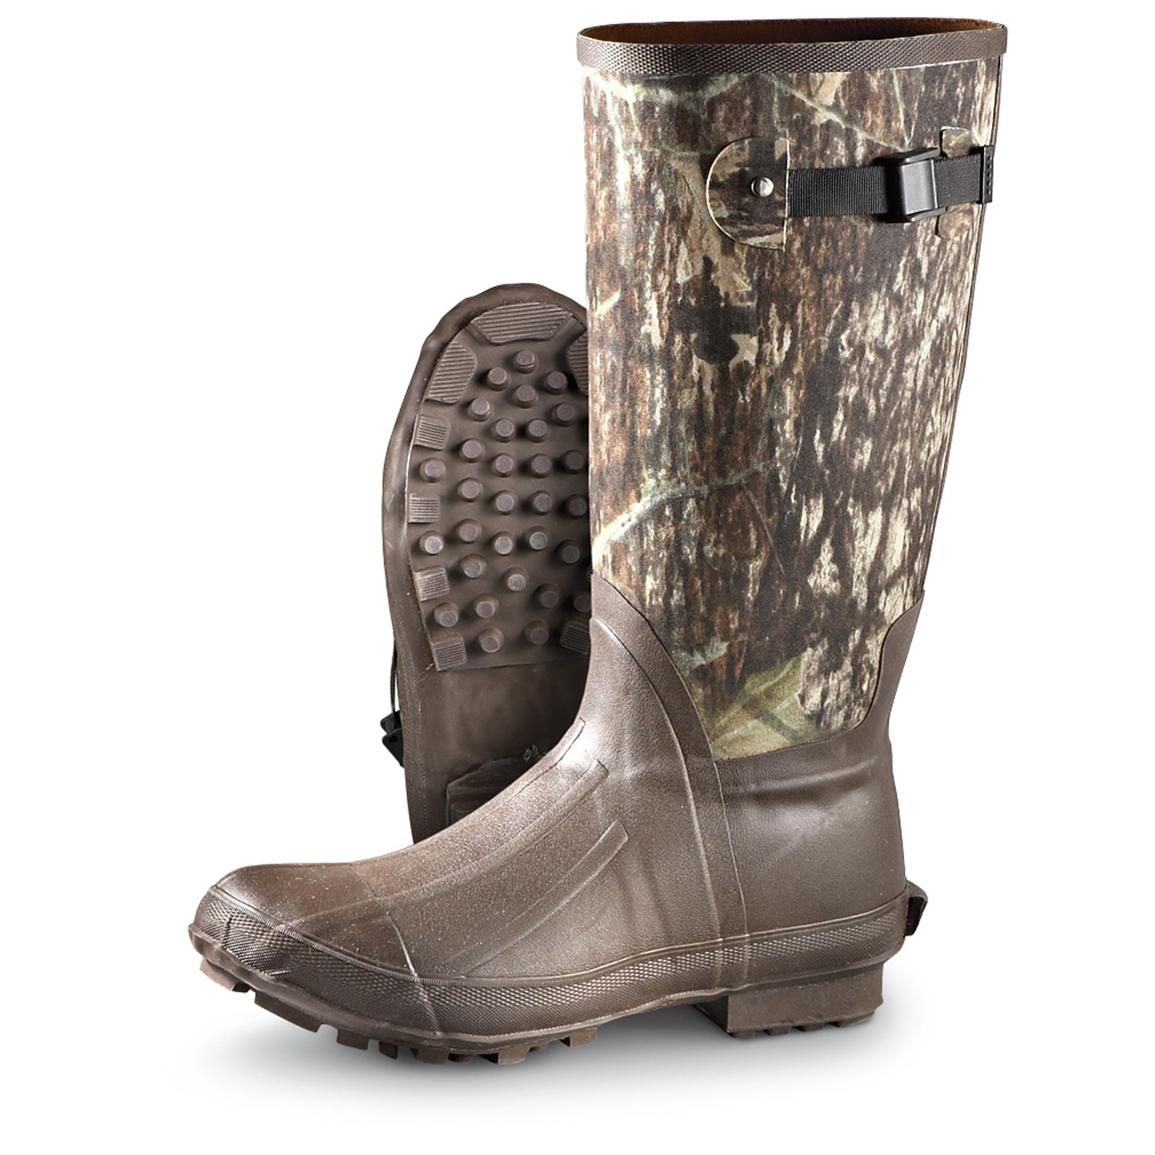 thinsulate rain boots